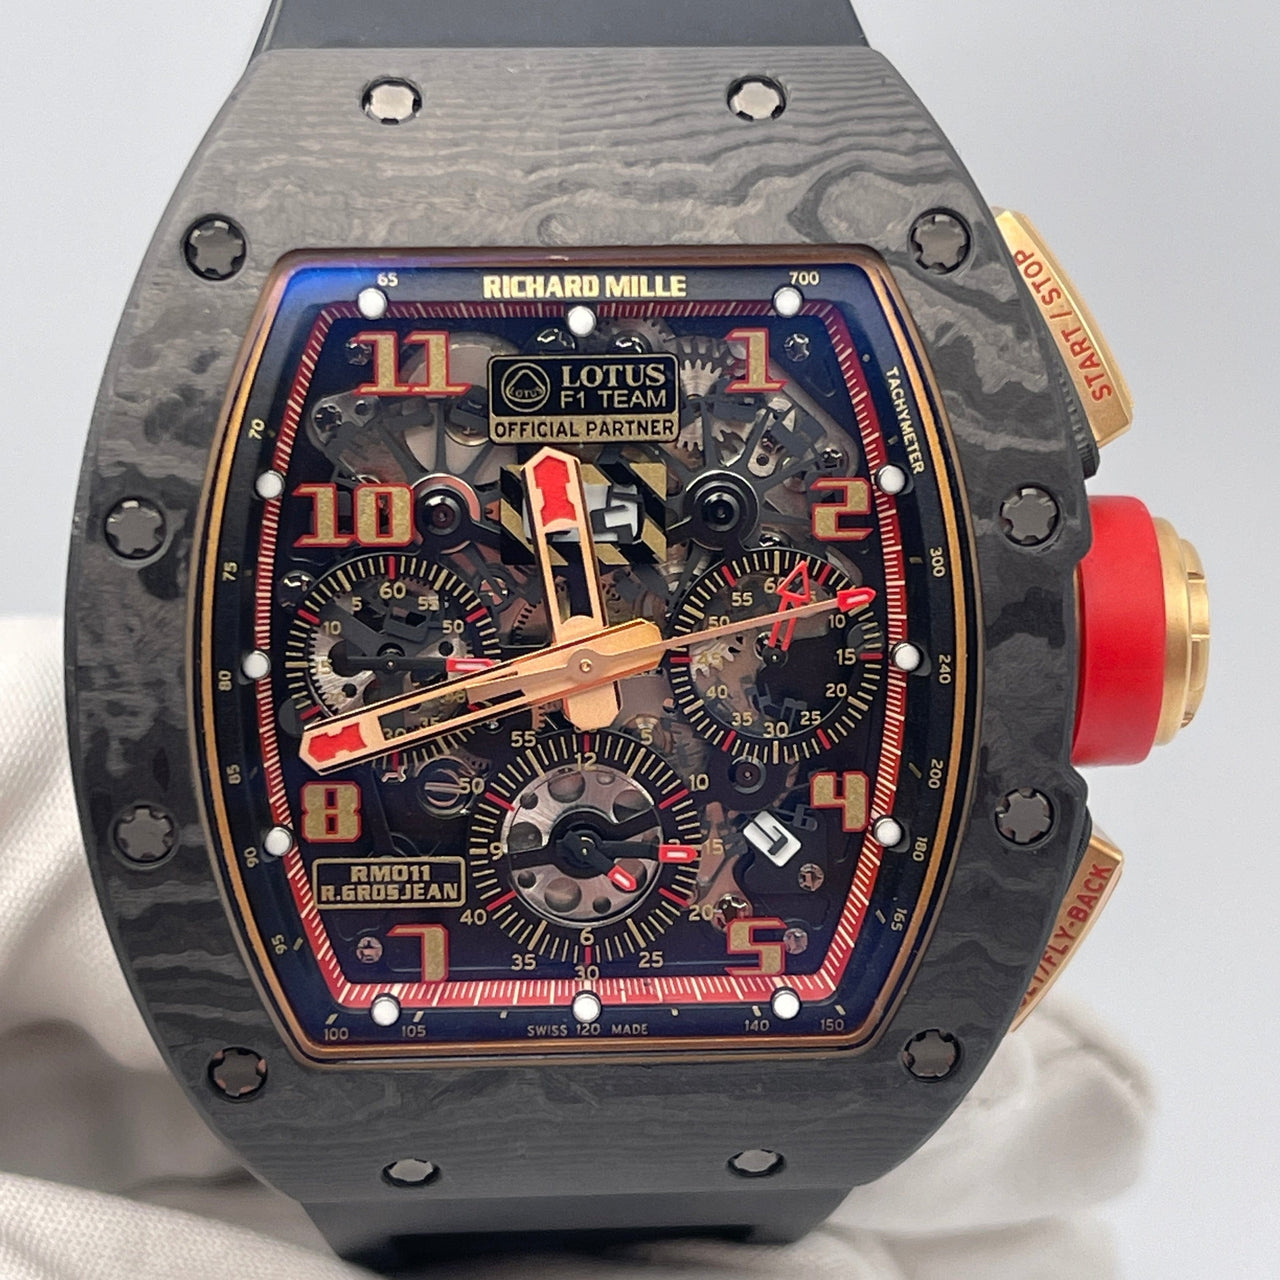 Luxury Watch Richard Mille Romain Grosjean "Lotus F1" Carbon NTPT RM011 Wrist Aficionado